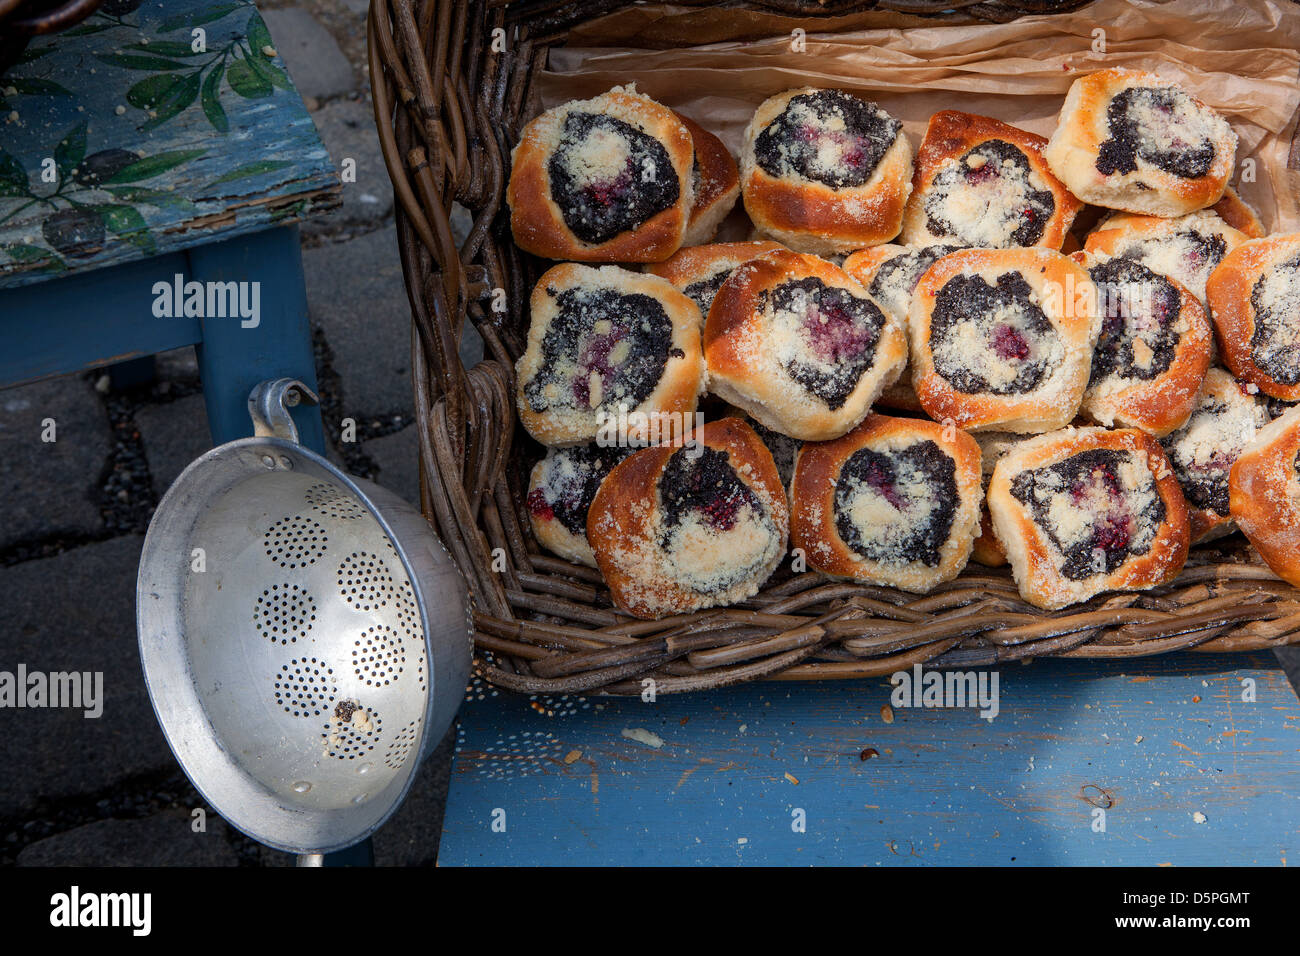 Prague food market, Old Bohemian cakes sale in a basket, Naplavka Market, Czech  Republic Stock Photo - Alamy